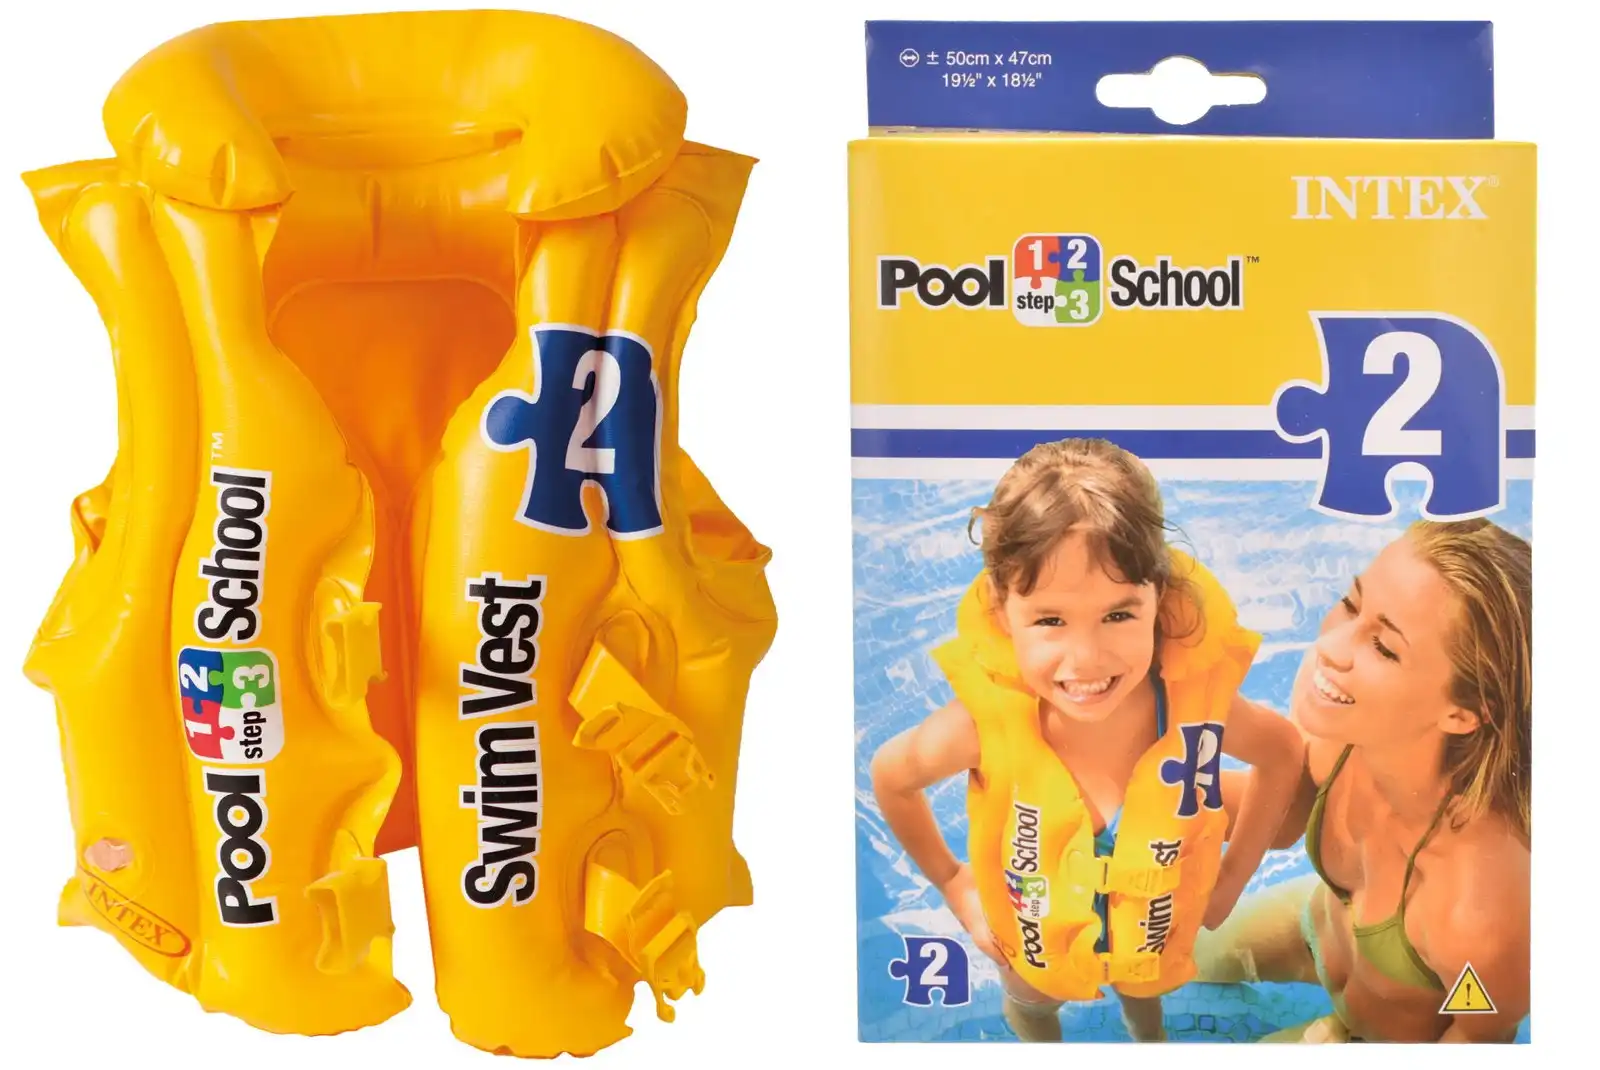 Intex Pool School Deluxe Swim Vest (Ages 3-6 Years)